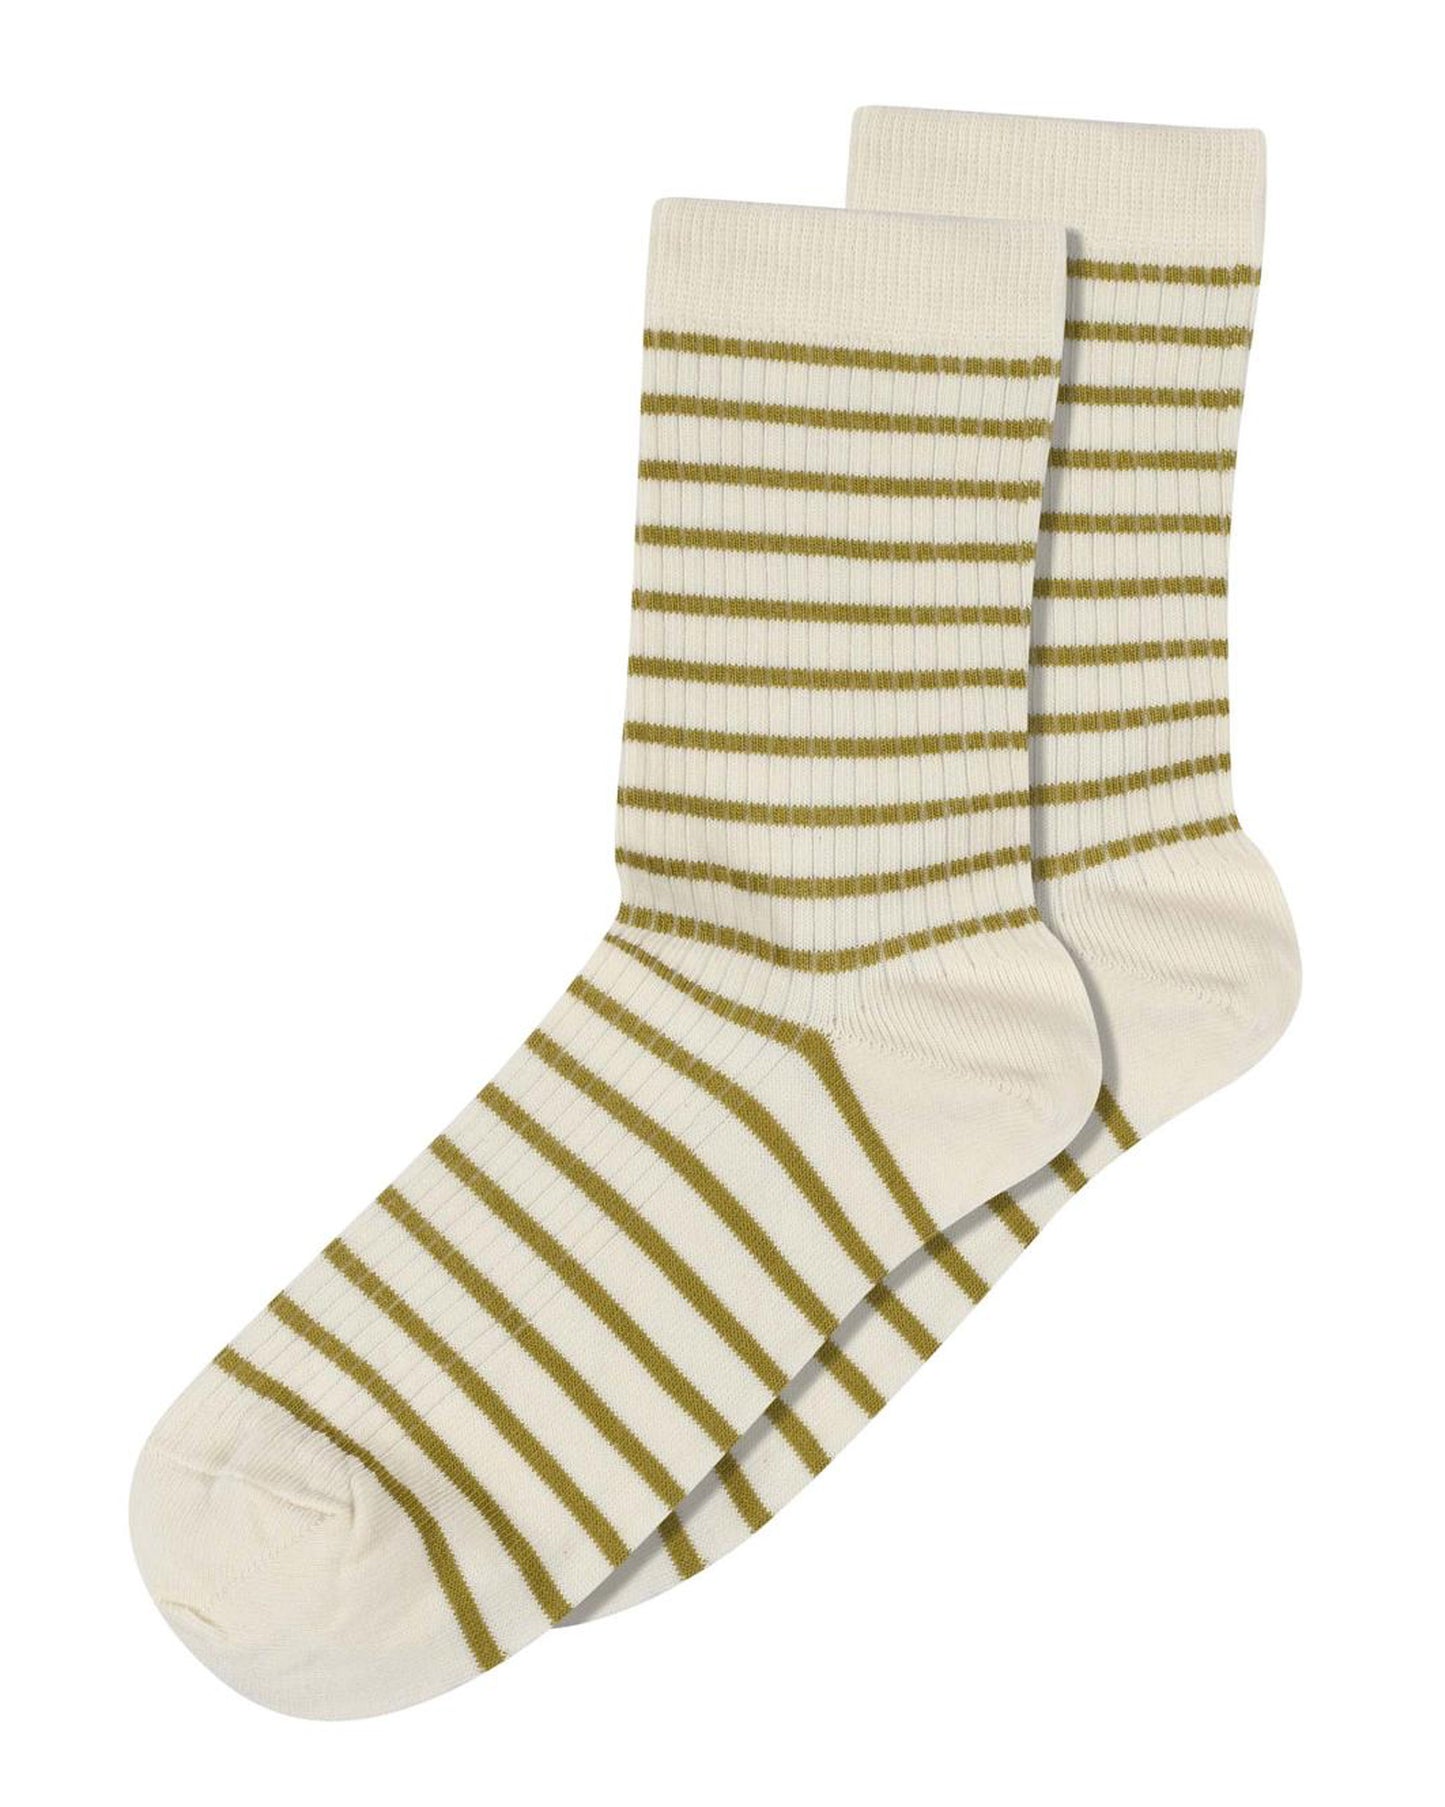 MP Denmark 77715 Lydia Sock - Cream crew length ribbed cotton ankle socks with a thin khaki green horizontal stripe pattern.